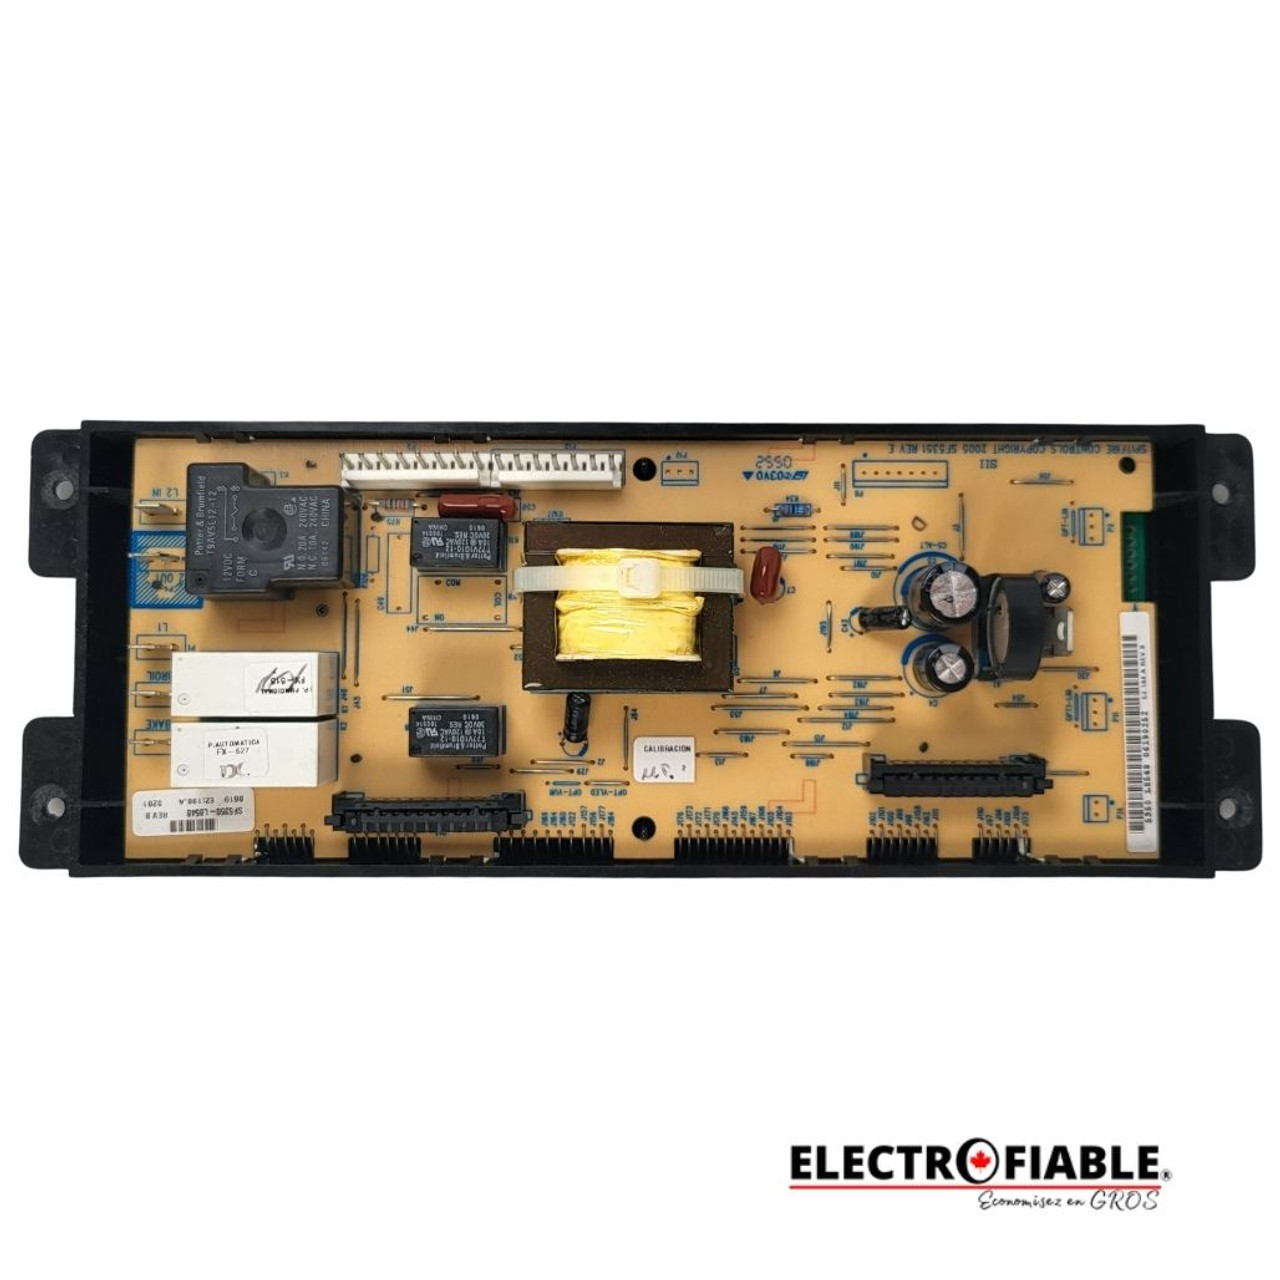 Electrolux Control panel, 316418548